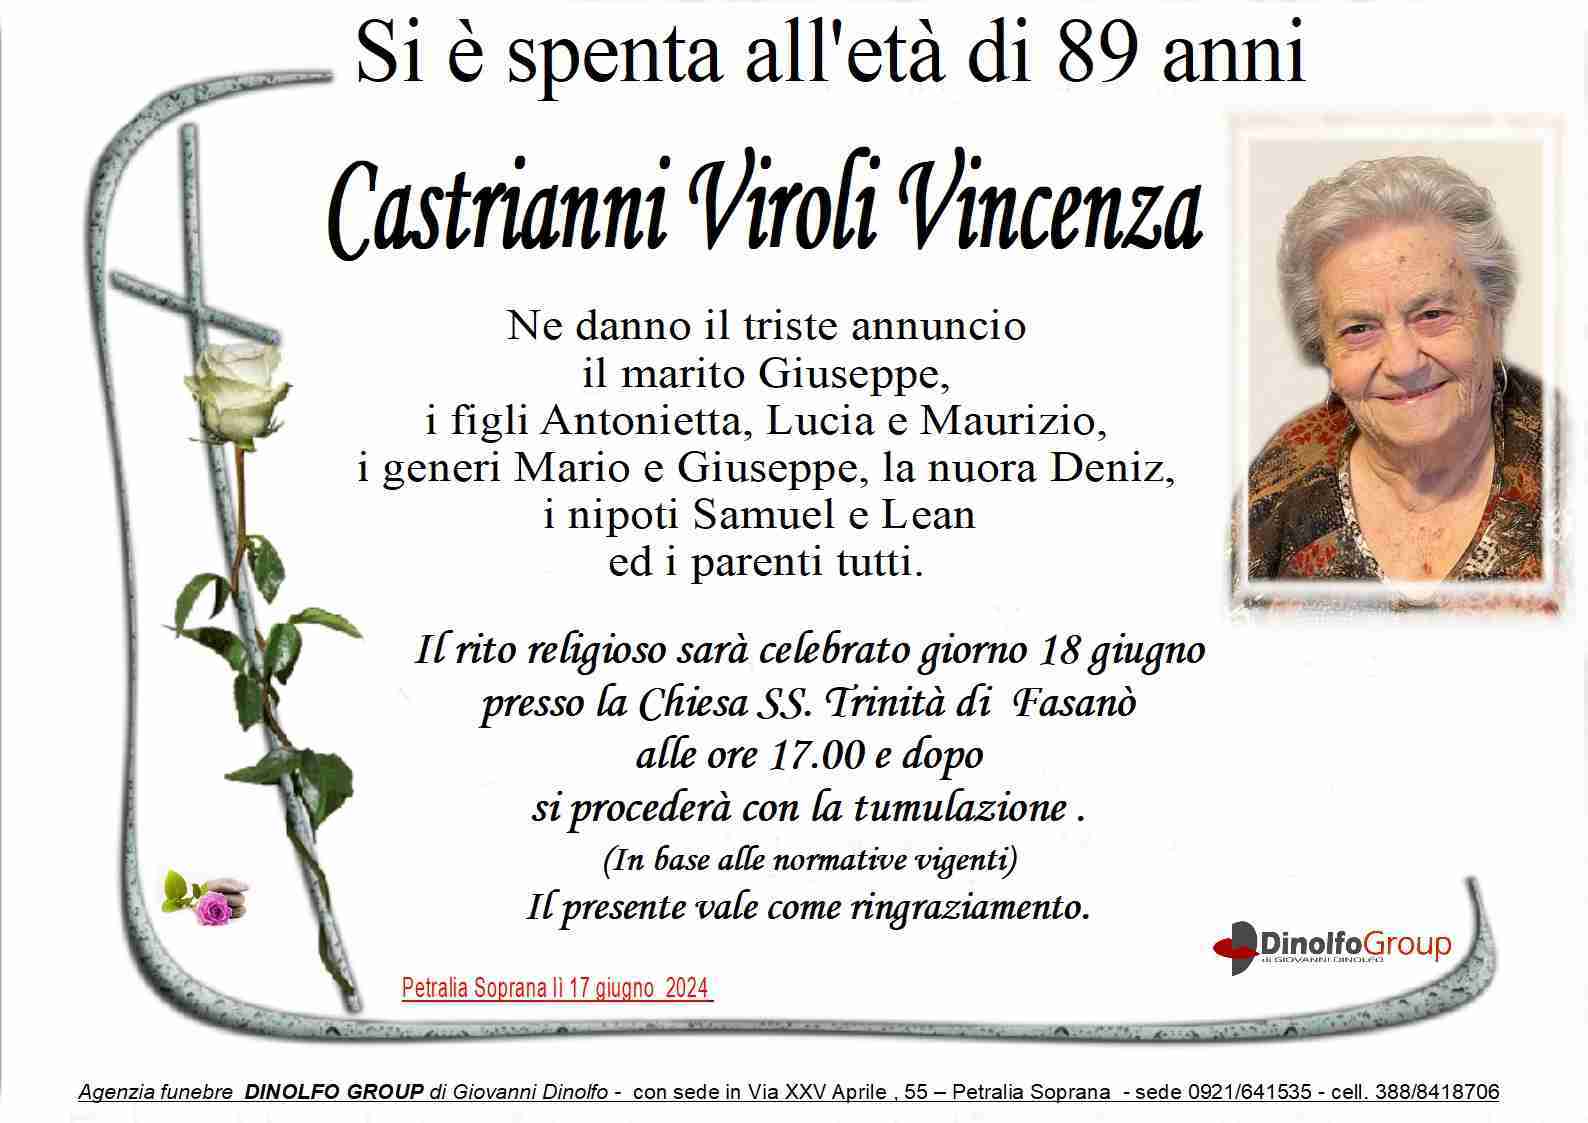 Vincenza Castrianni Viroli